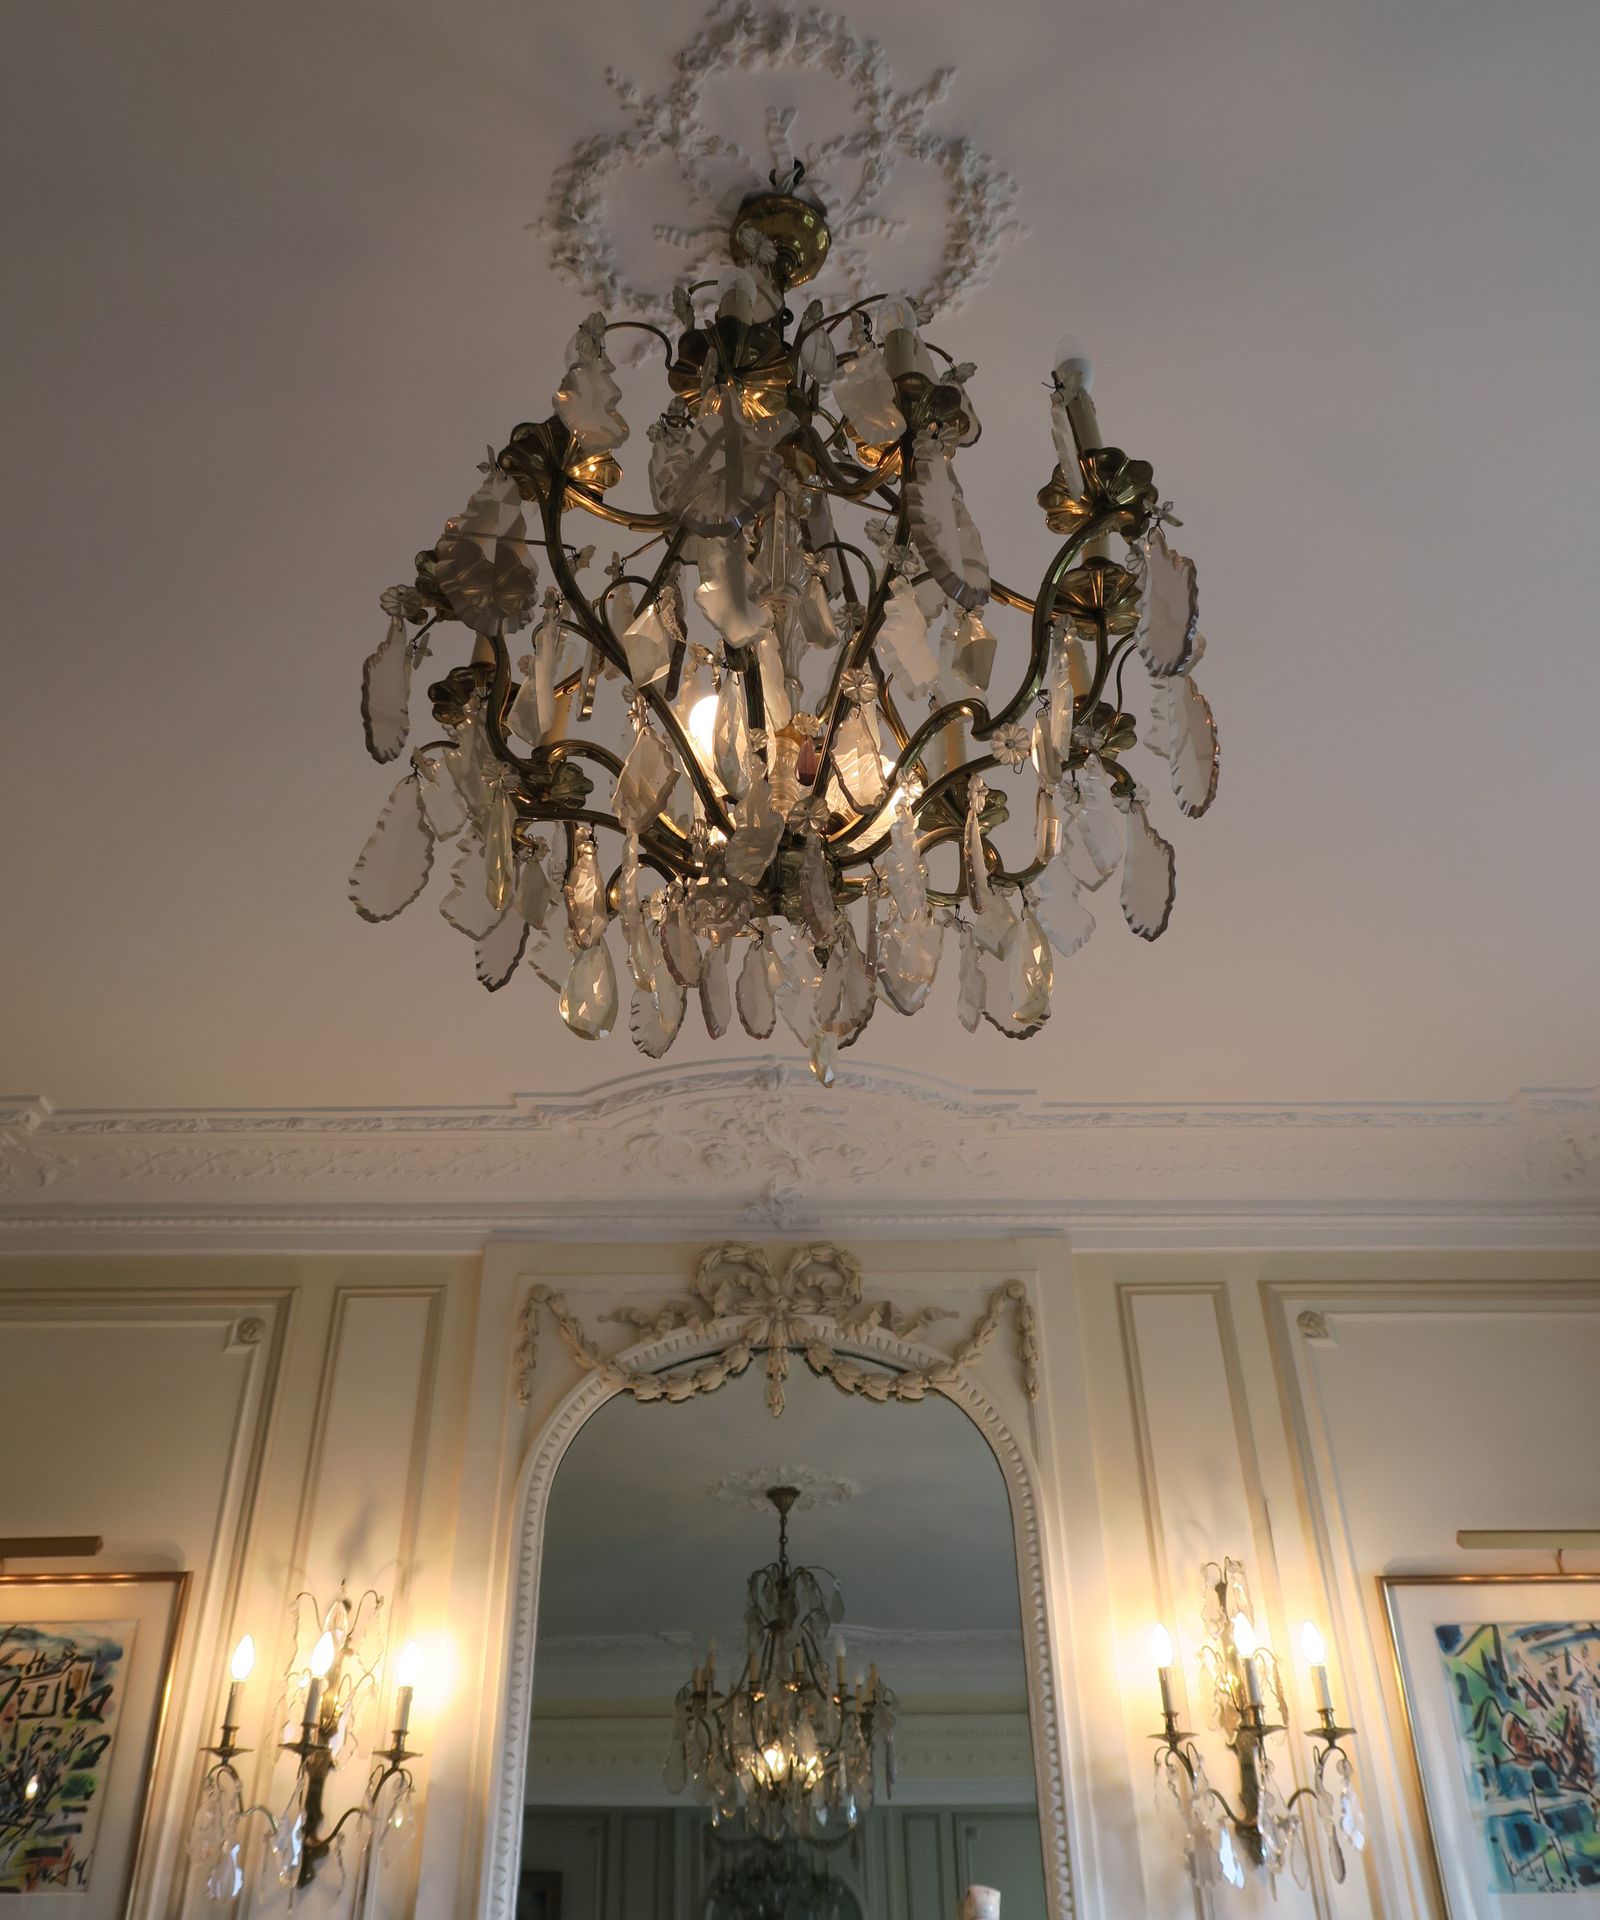 Null 一盏路易十五风格的十二灯吊灯和一对青铜吊灯的吊坠

高约110厘米的吊灯